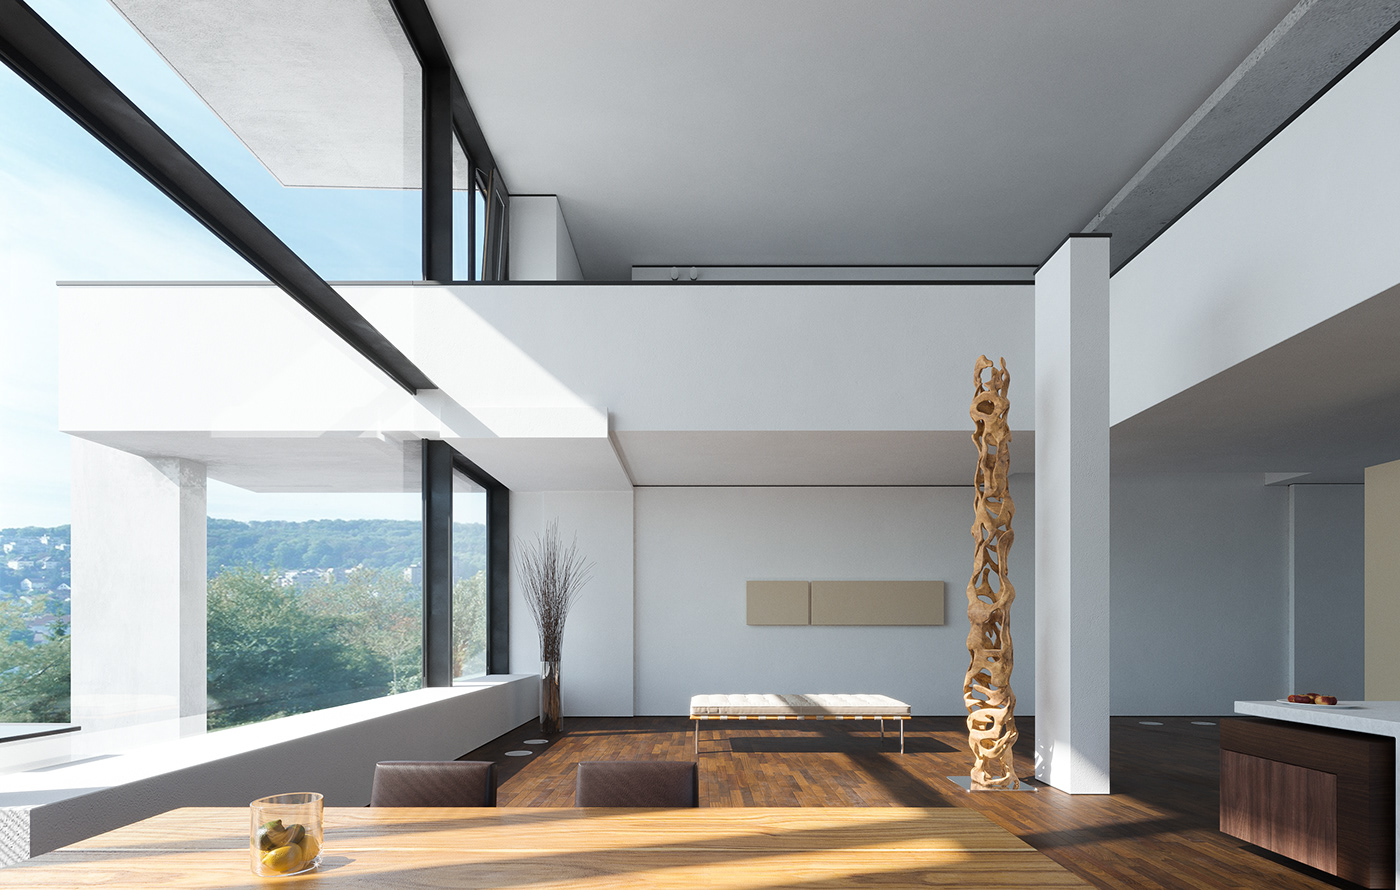 alexanderbrenner house Housevisualization Render rendering Villa villavisualization